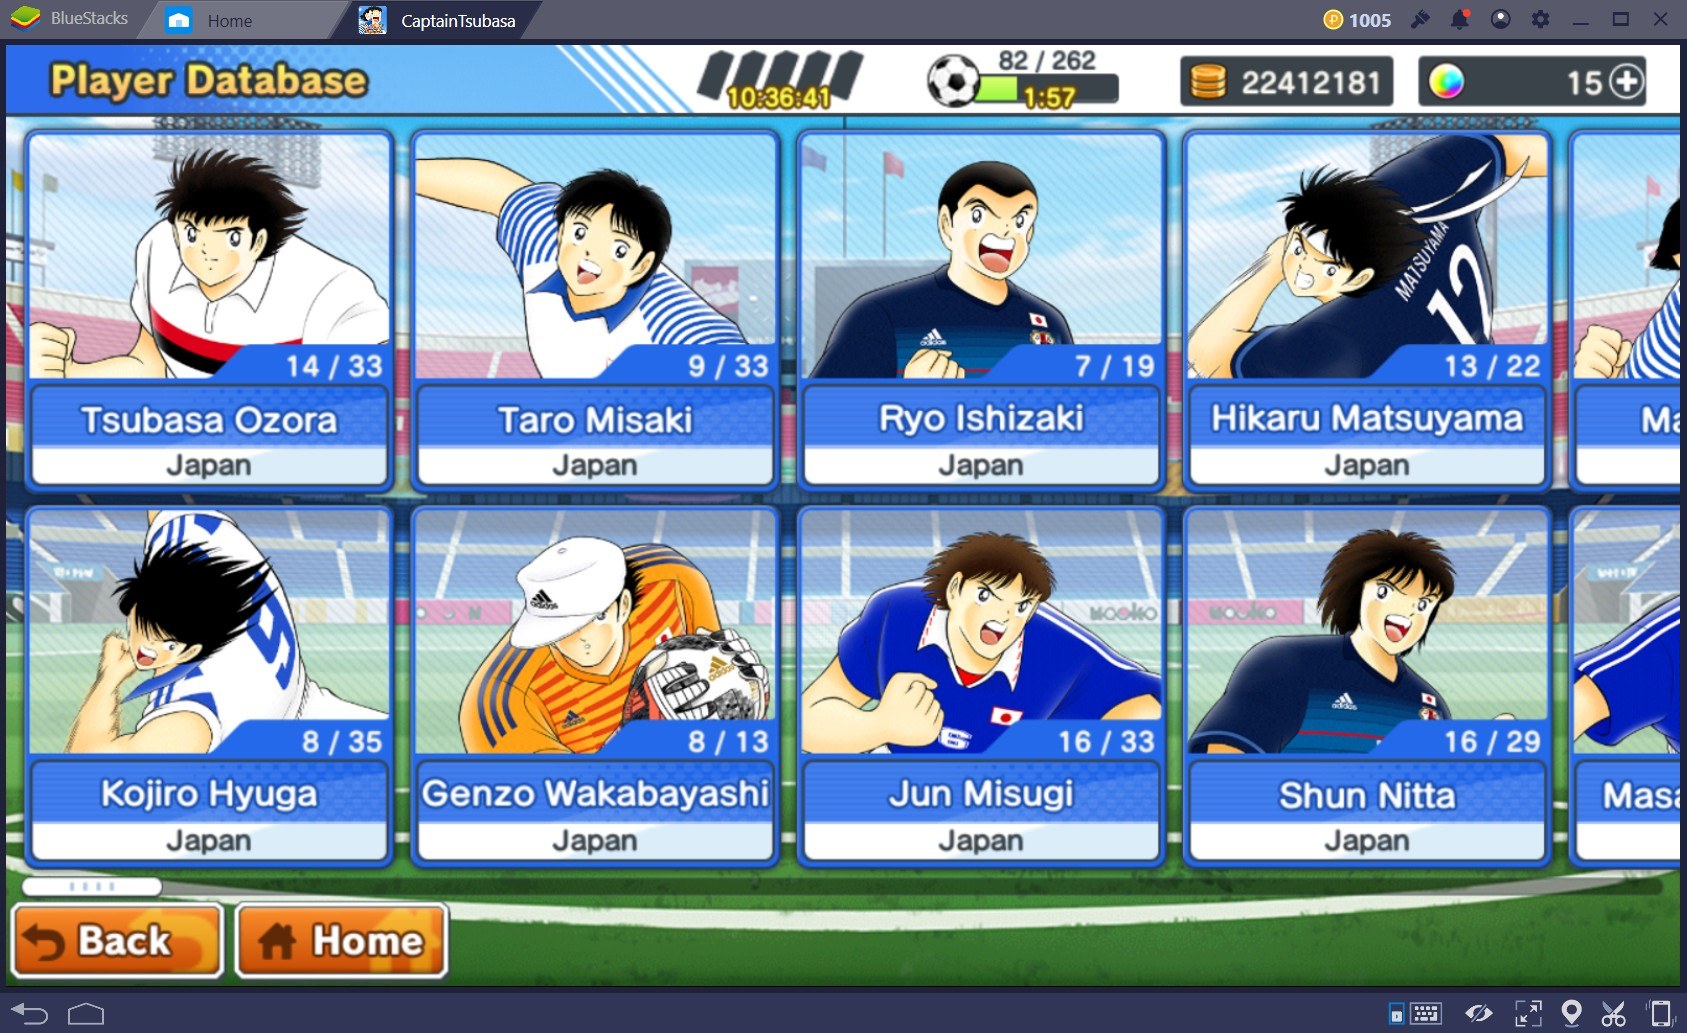 Captain Tsubasa: Dream Team - Game hay mùa World Cup 2018 để chơi cùng BlueStacks